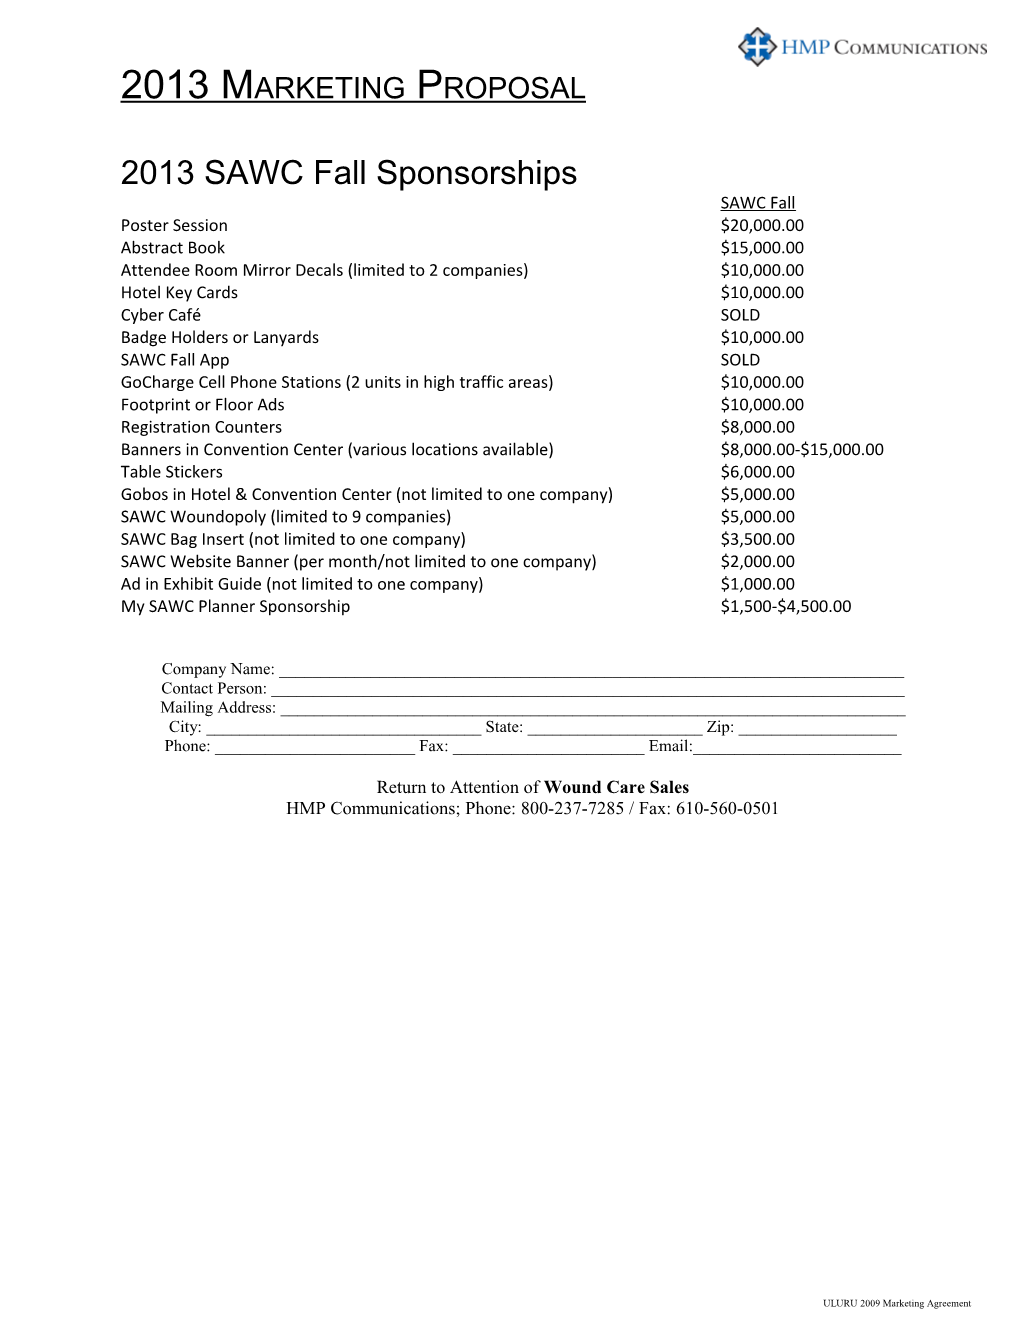 2013 SAWC Fall Sponsorships